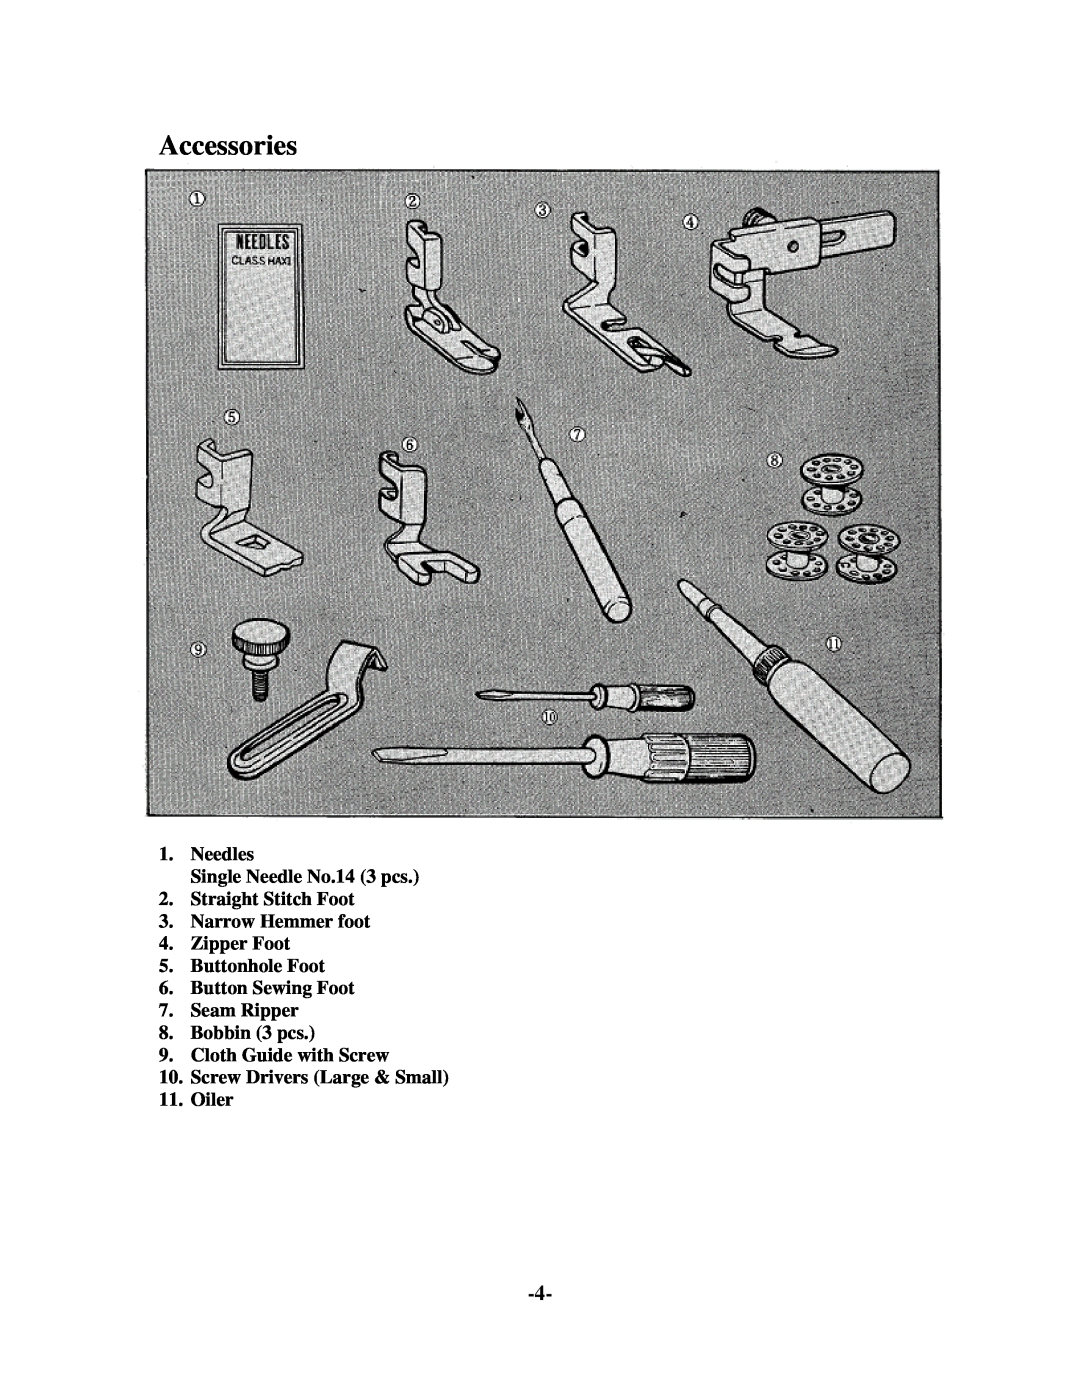 Brother 681B-UG manual Accessories, Needles Single Needle No.14 3 pcs 2. Straight Stitch Foot 